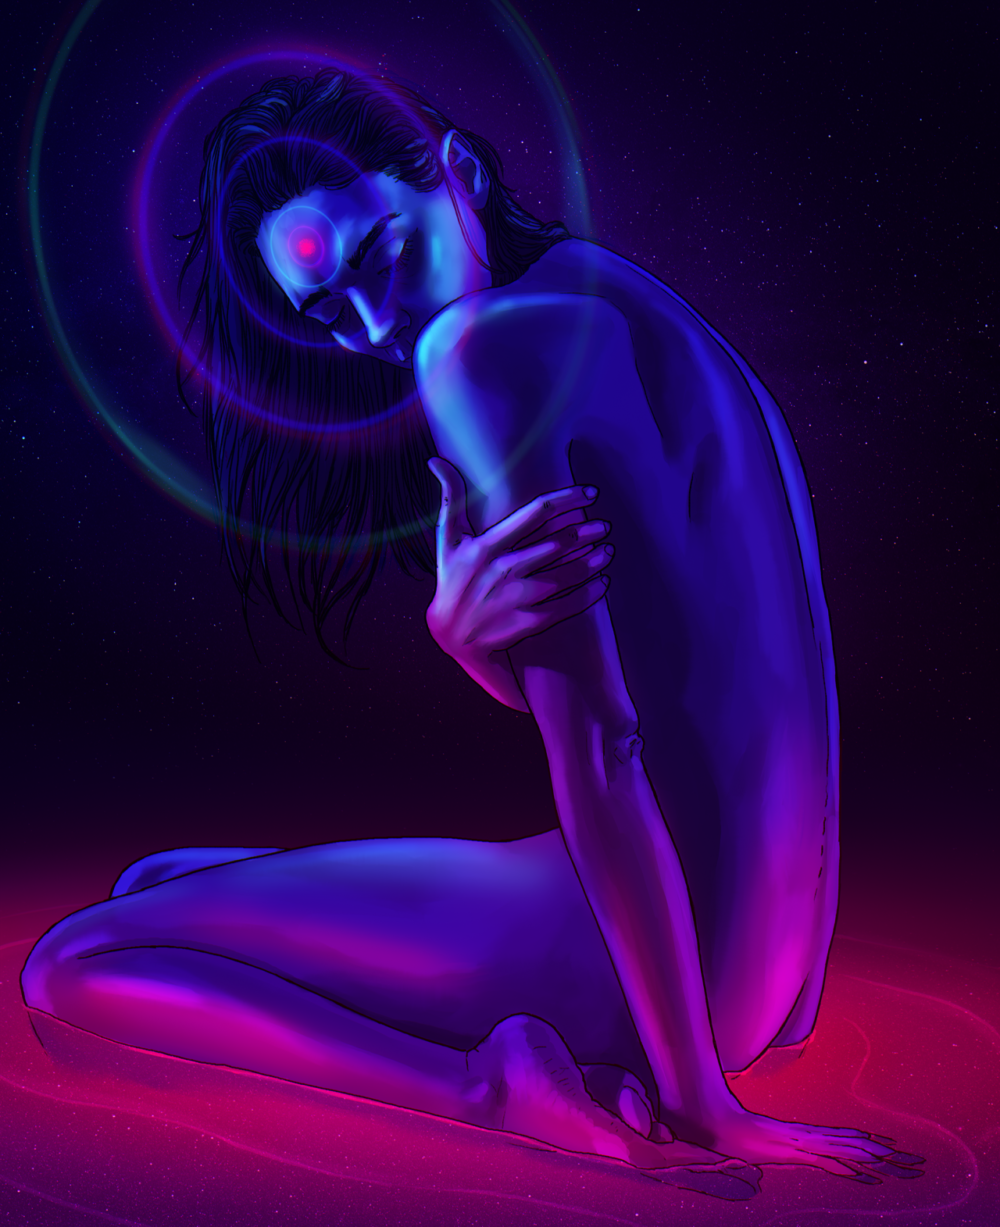 The Psychedelic Dark And Erotic Digital Art Of Phazed 1